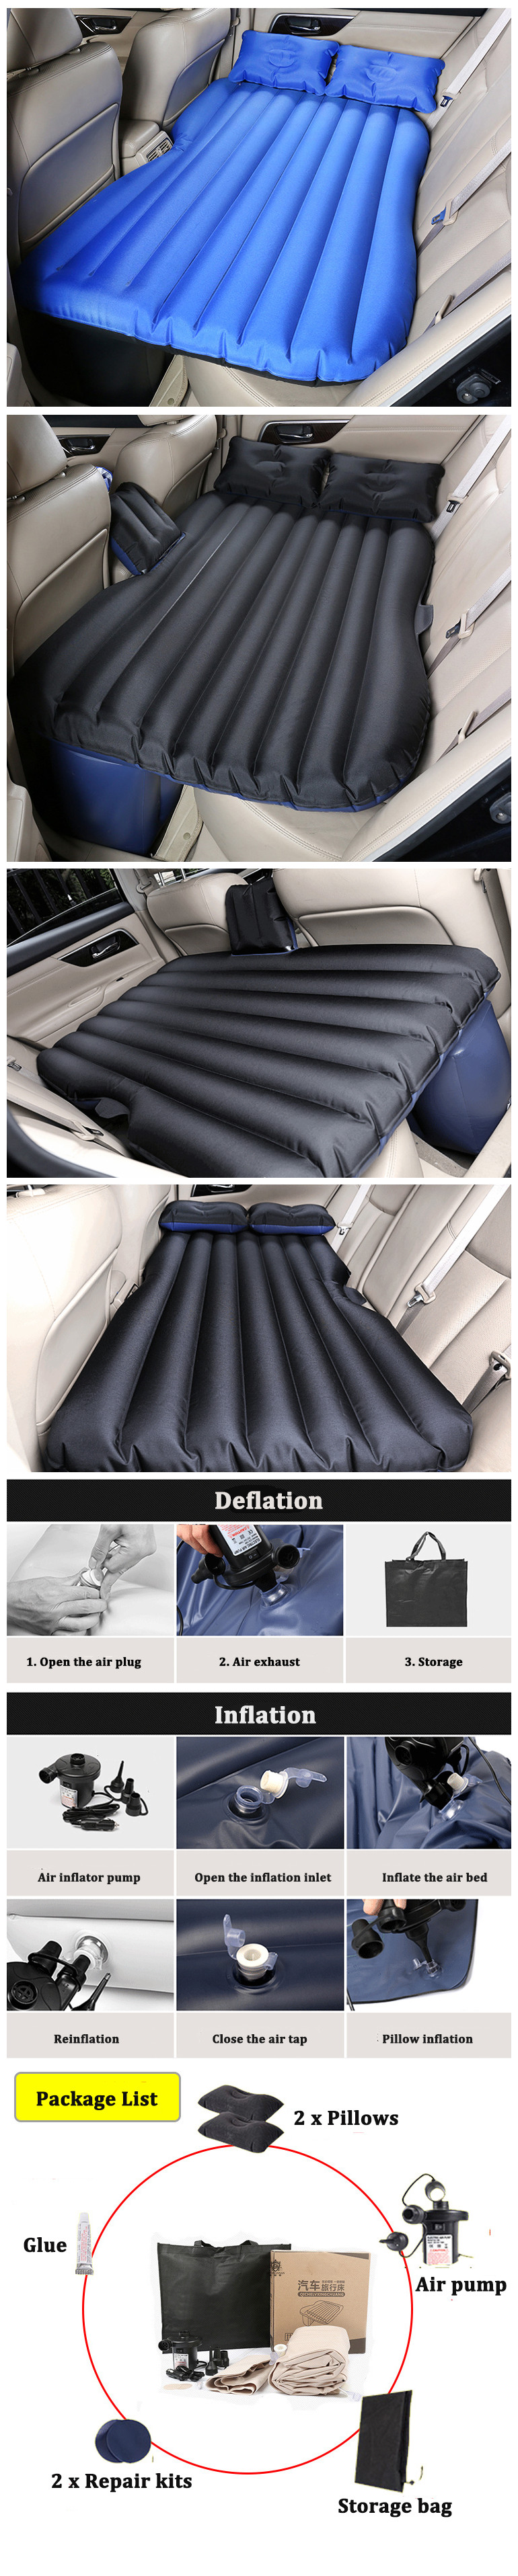 IPReereg-SUV-Inflatable-Air-Mattresses-Car-Back-Seat-Sleep-Bed-Camping-Travel-Flocking-Pad-Cushion-1270738-8